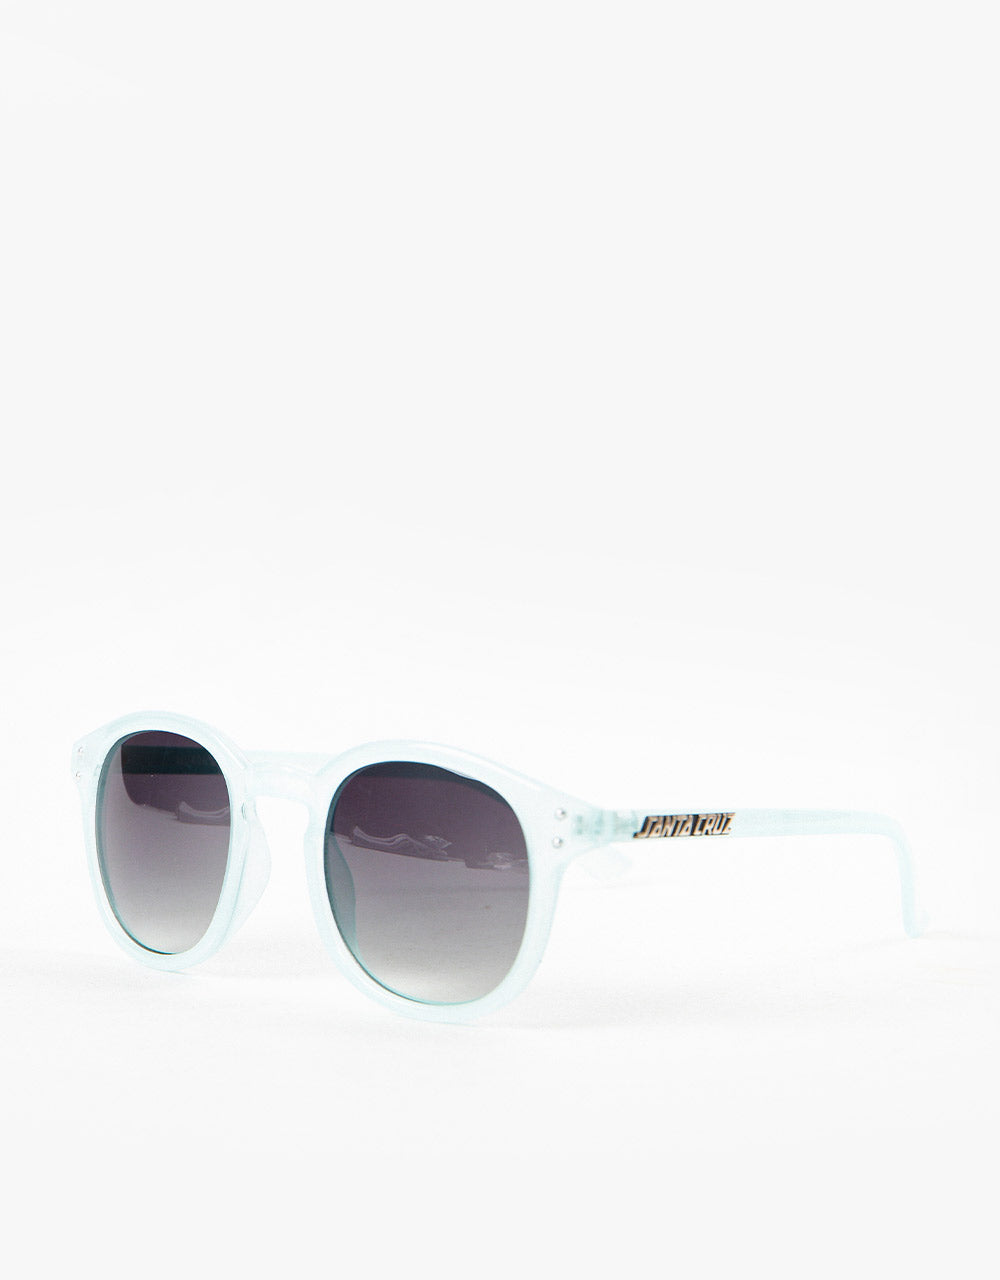 Santa Cruz Watson Sunglasses - Ice Blue